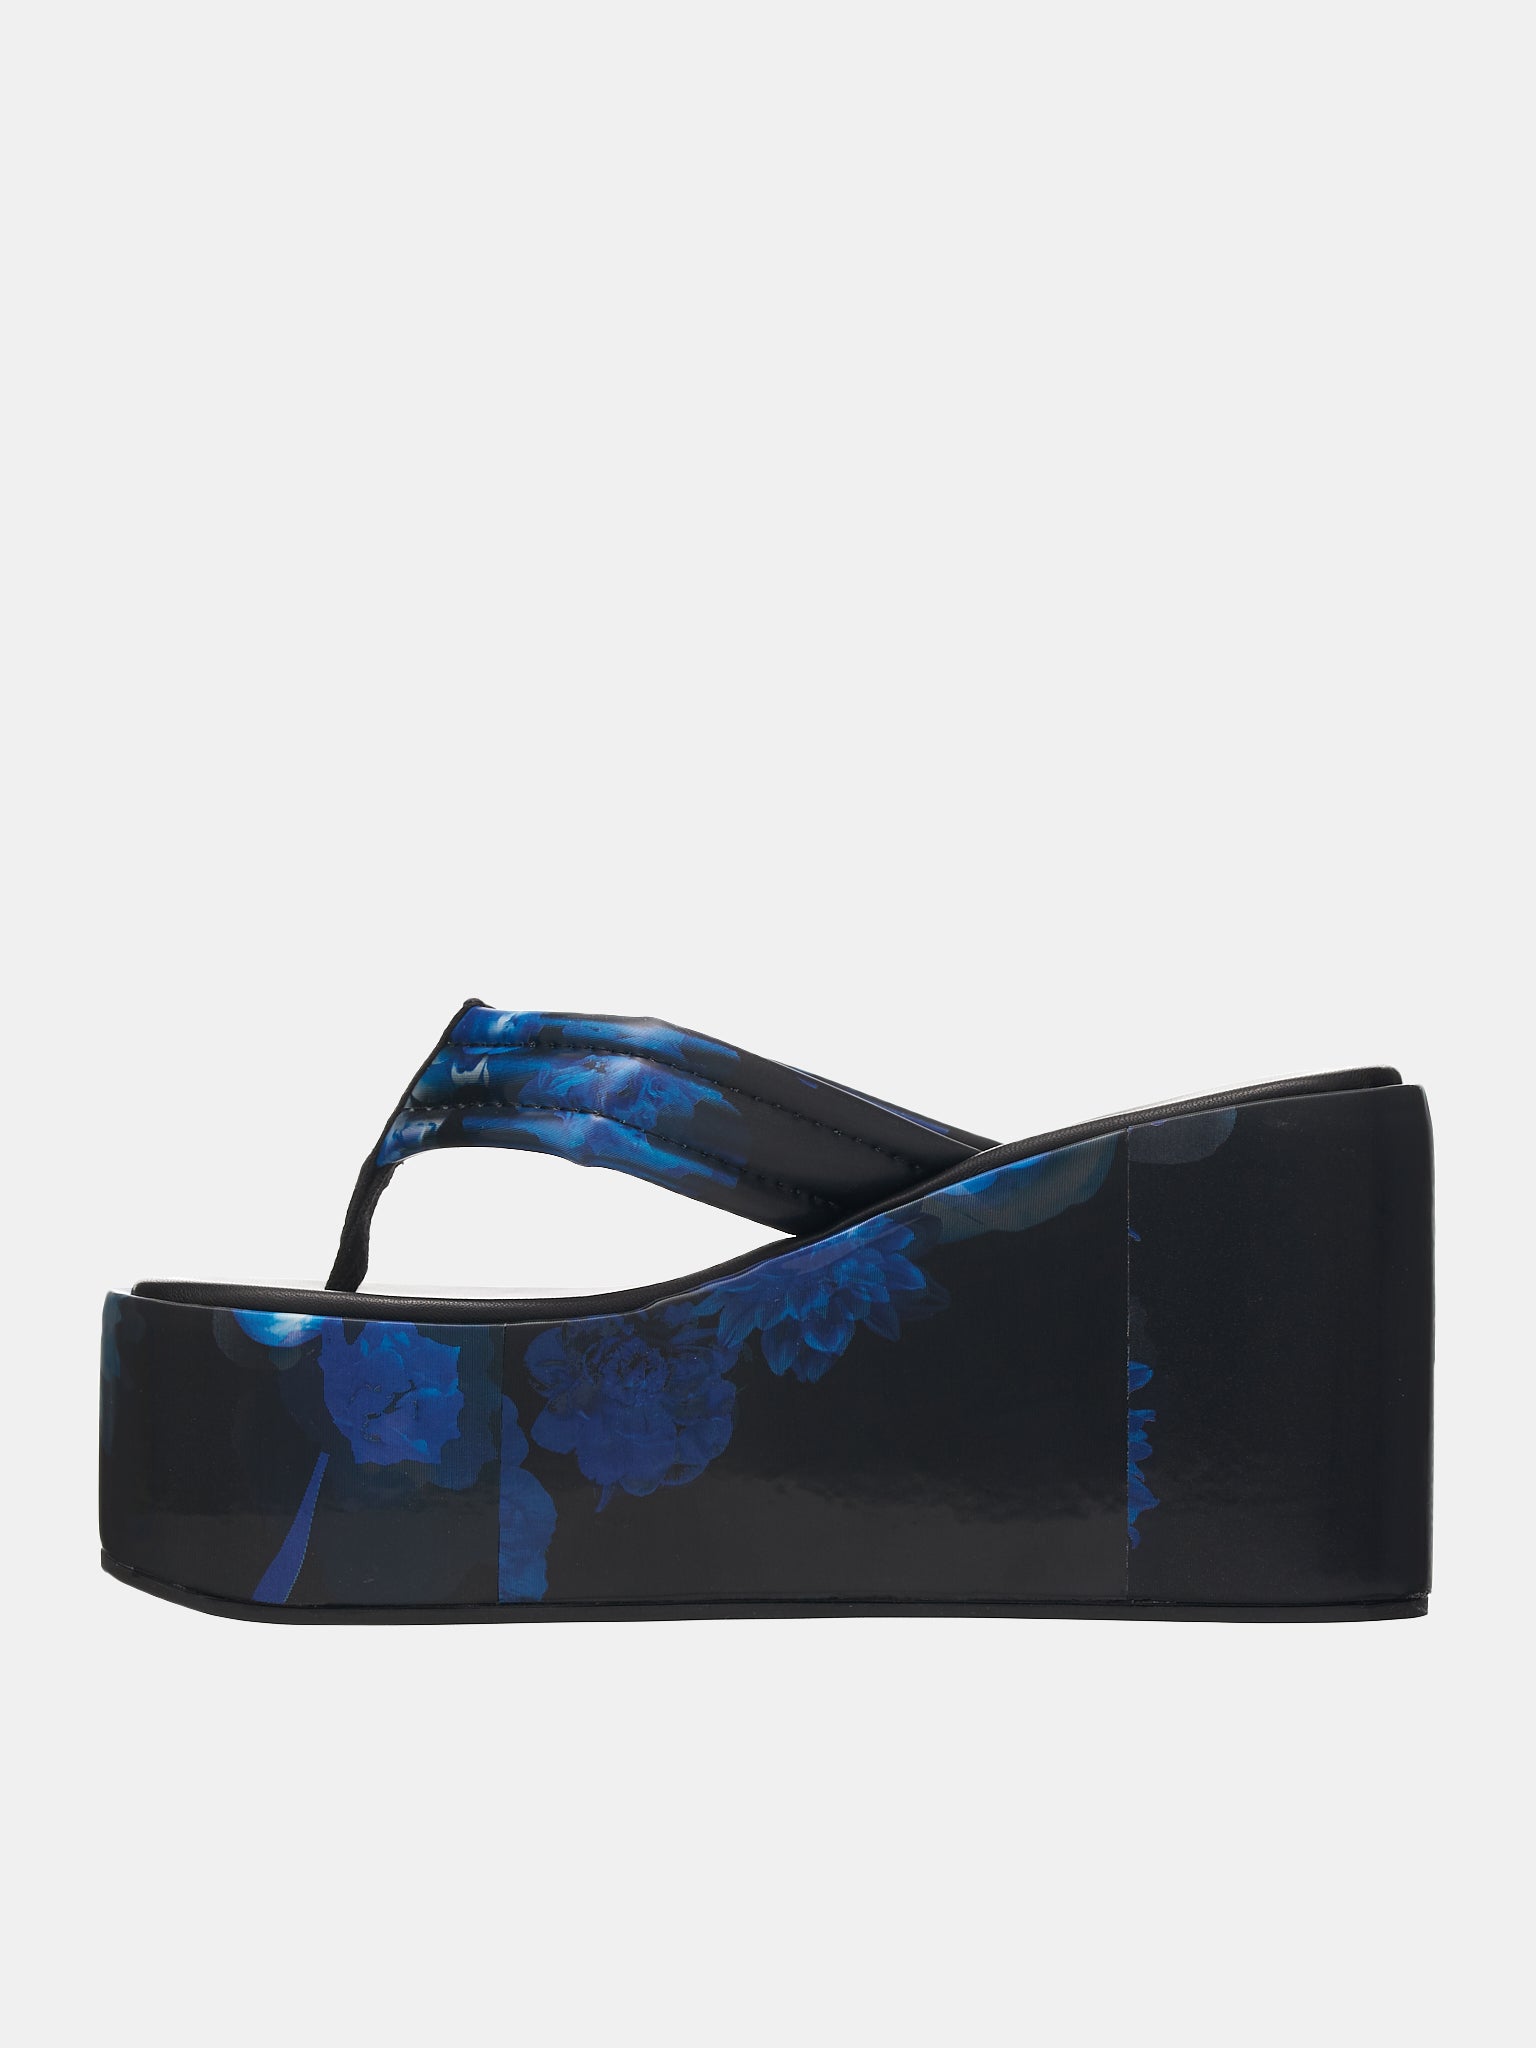 Holographic Wedge Sandals (COPSH09223-BLUE-BLACK)